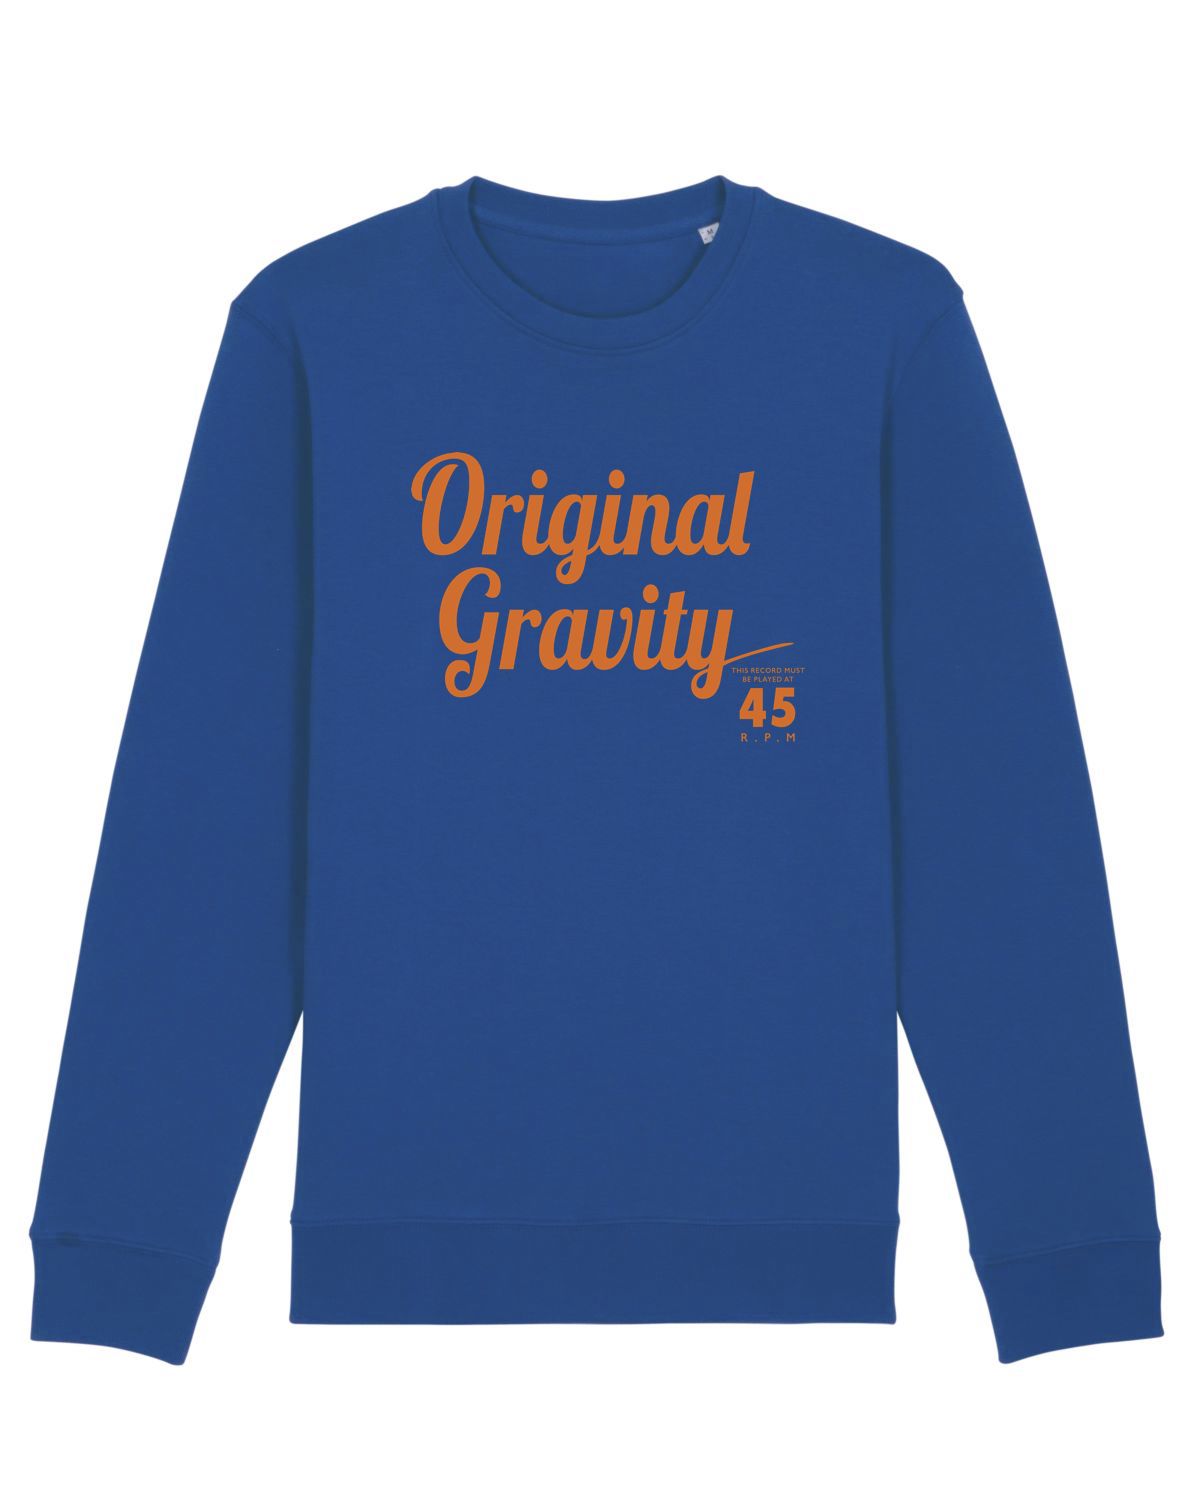 PLAYS at 45 RPM: Original Gravity Records Sweatshirt (3 Colour Options)